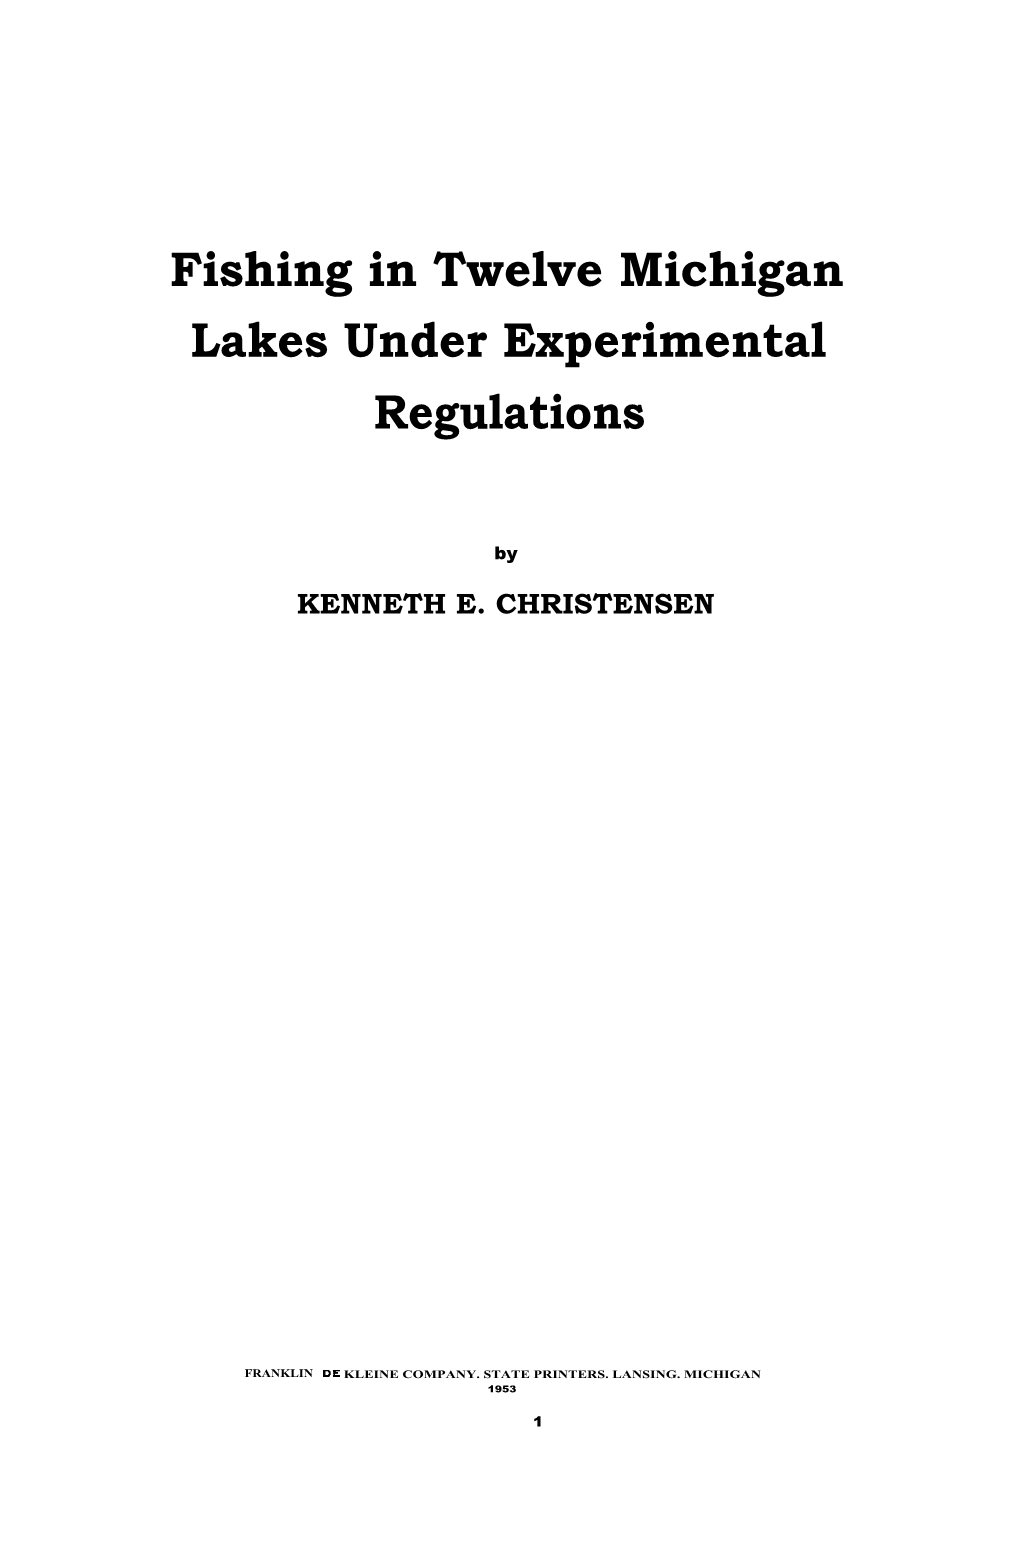 Fishing in Twelve Michigan Lakes Under Experimental Regulations